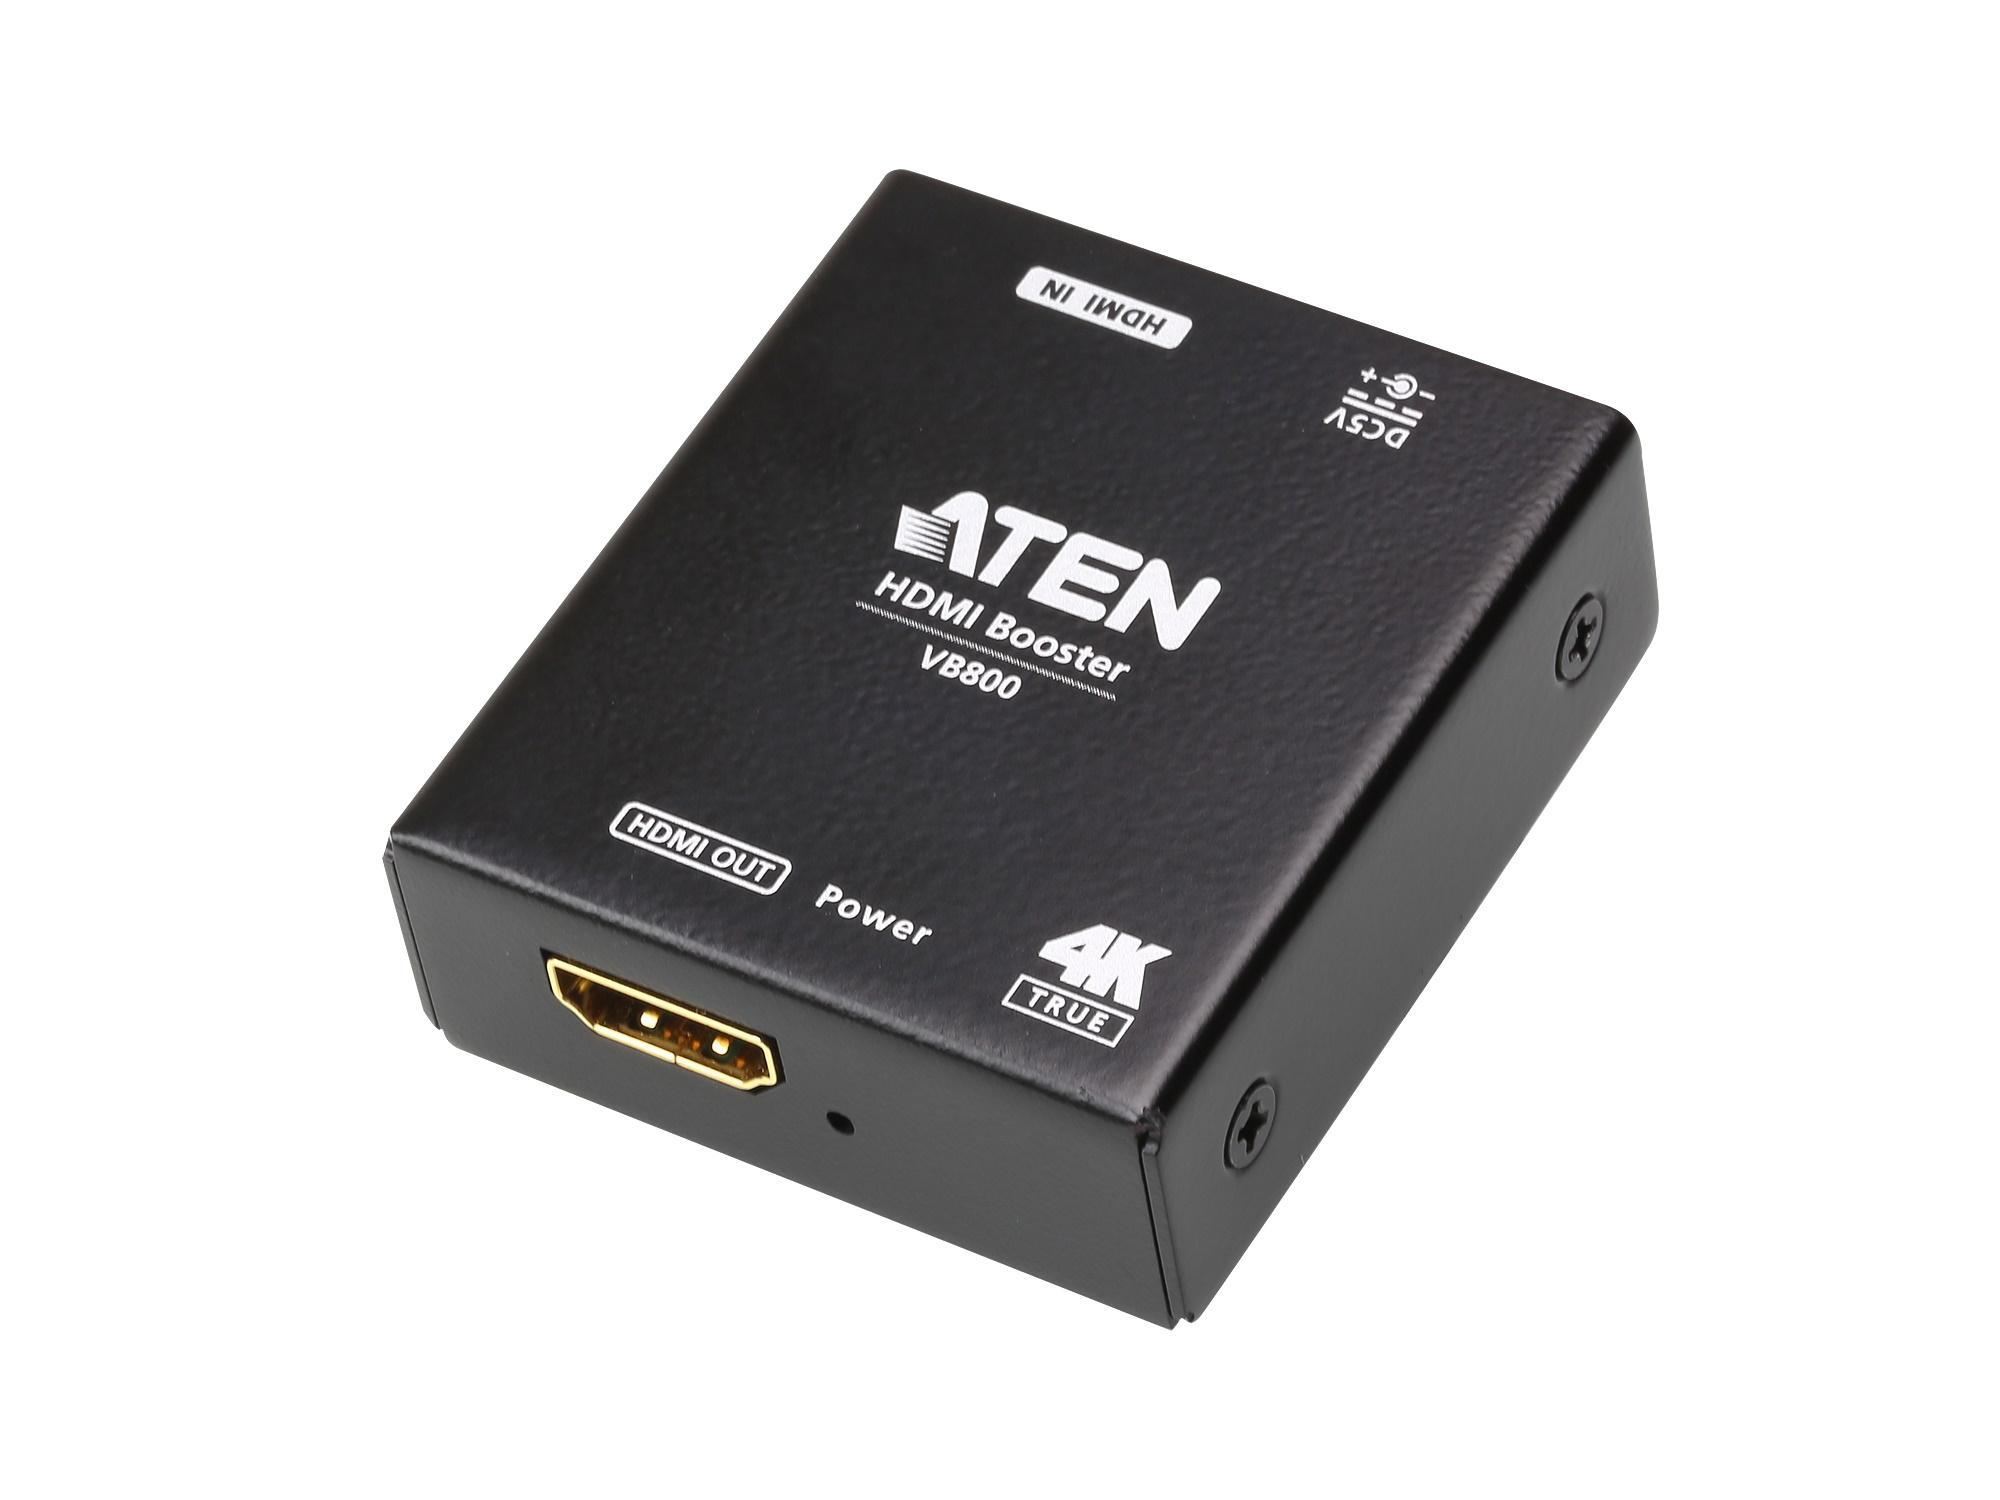 VB800 True 4K HDMI Booster (4K/20m) by Aten